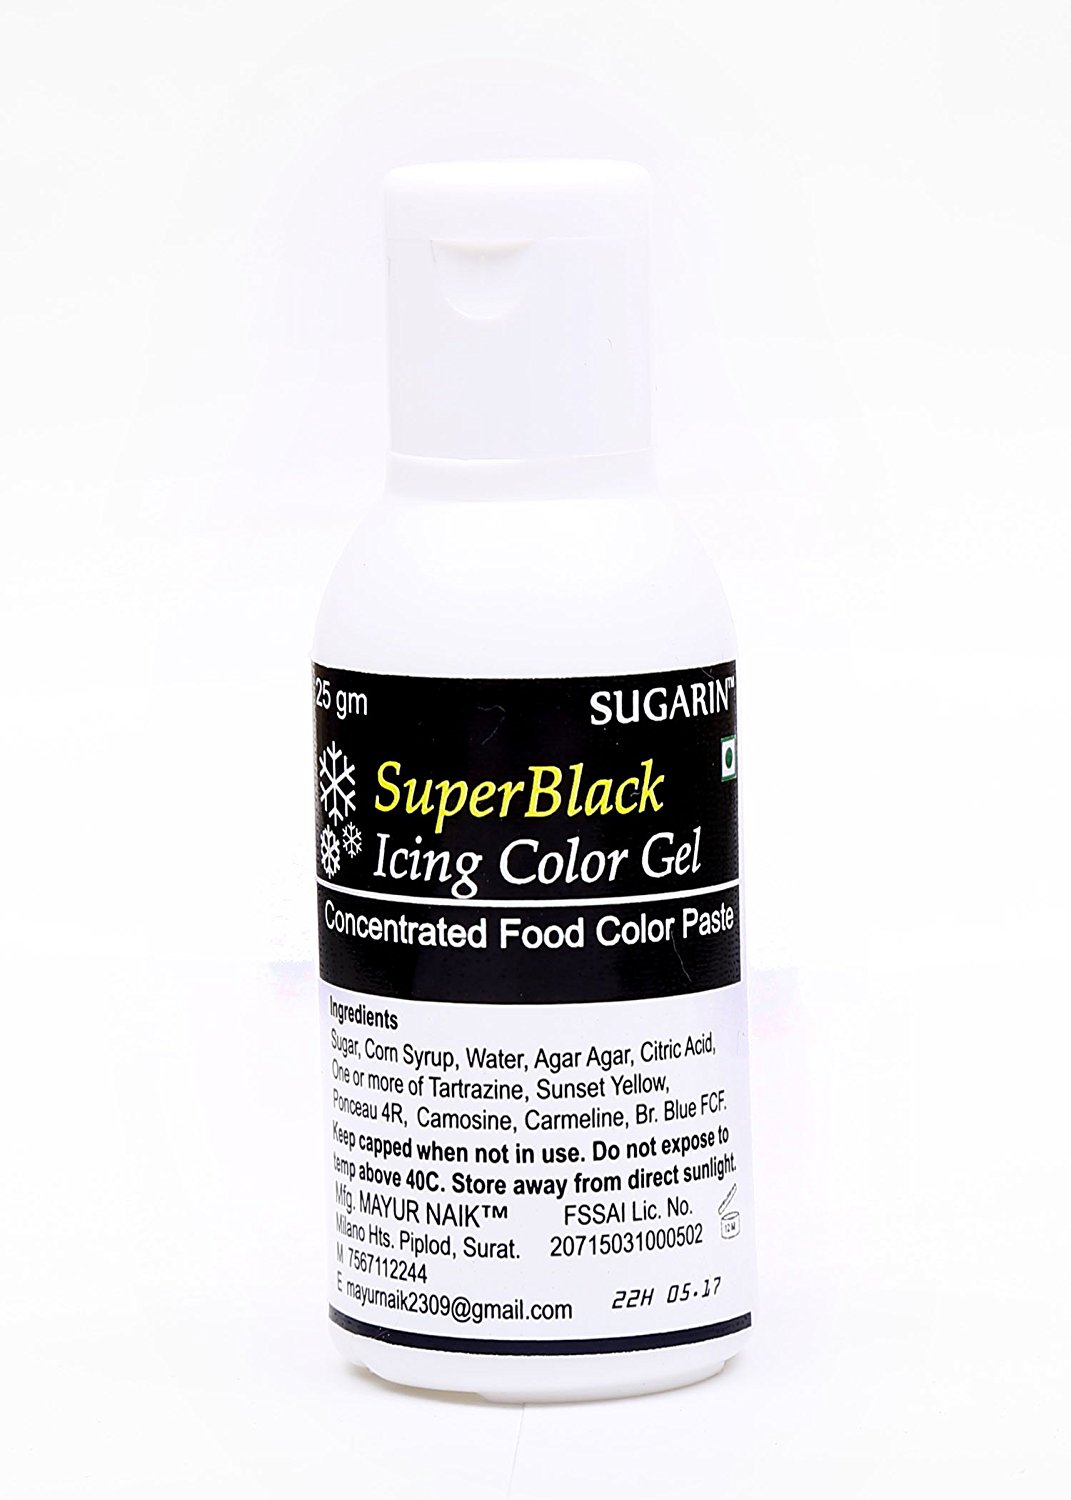 31688 Sugarin Icing Color Gel for Fondant, Super Black (Super Co